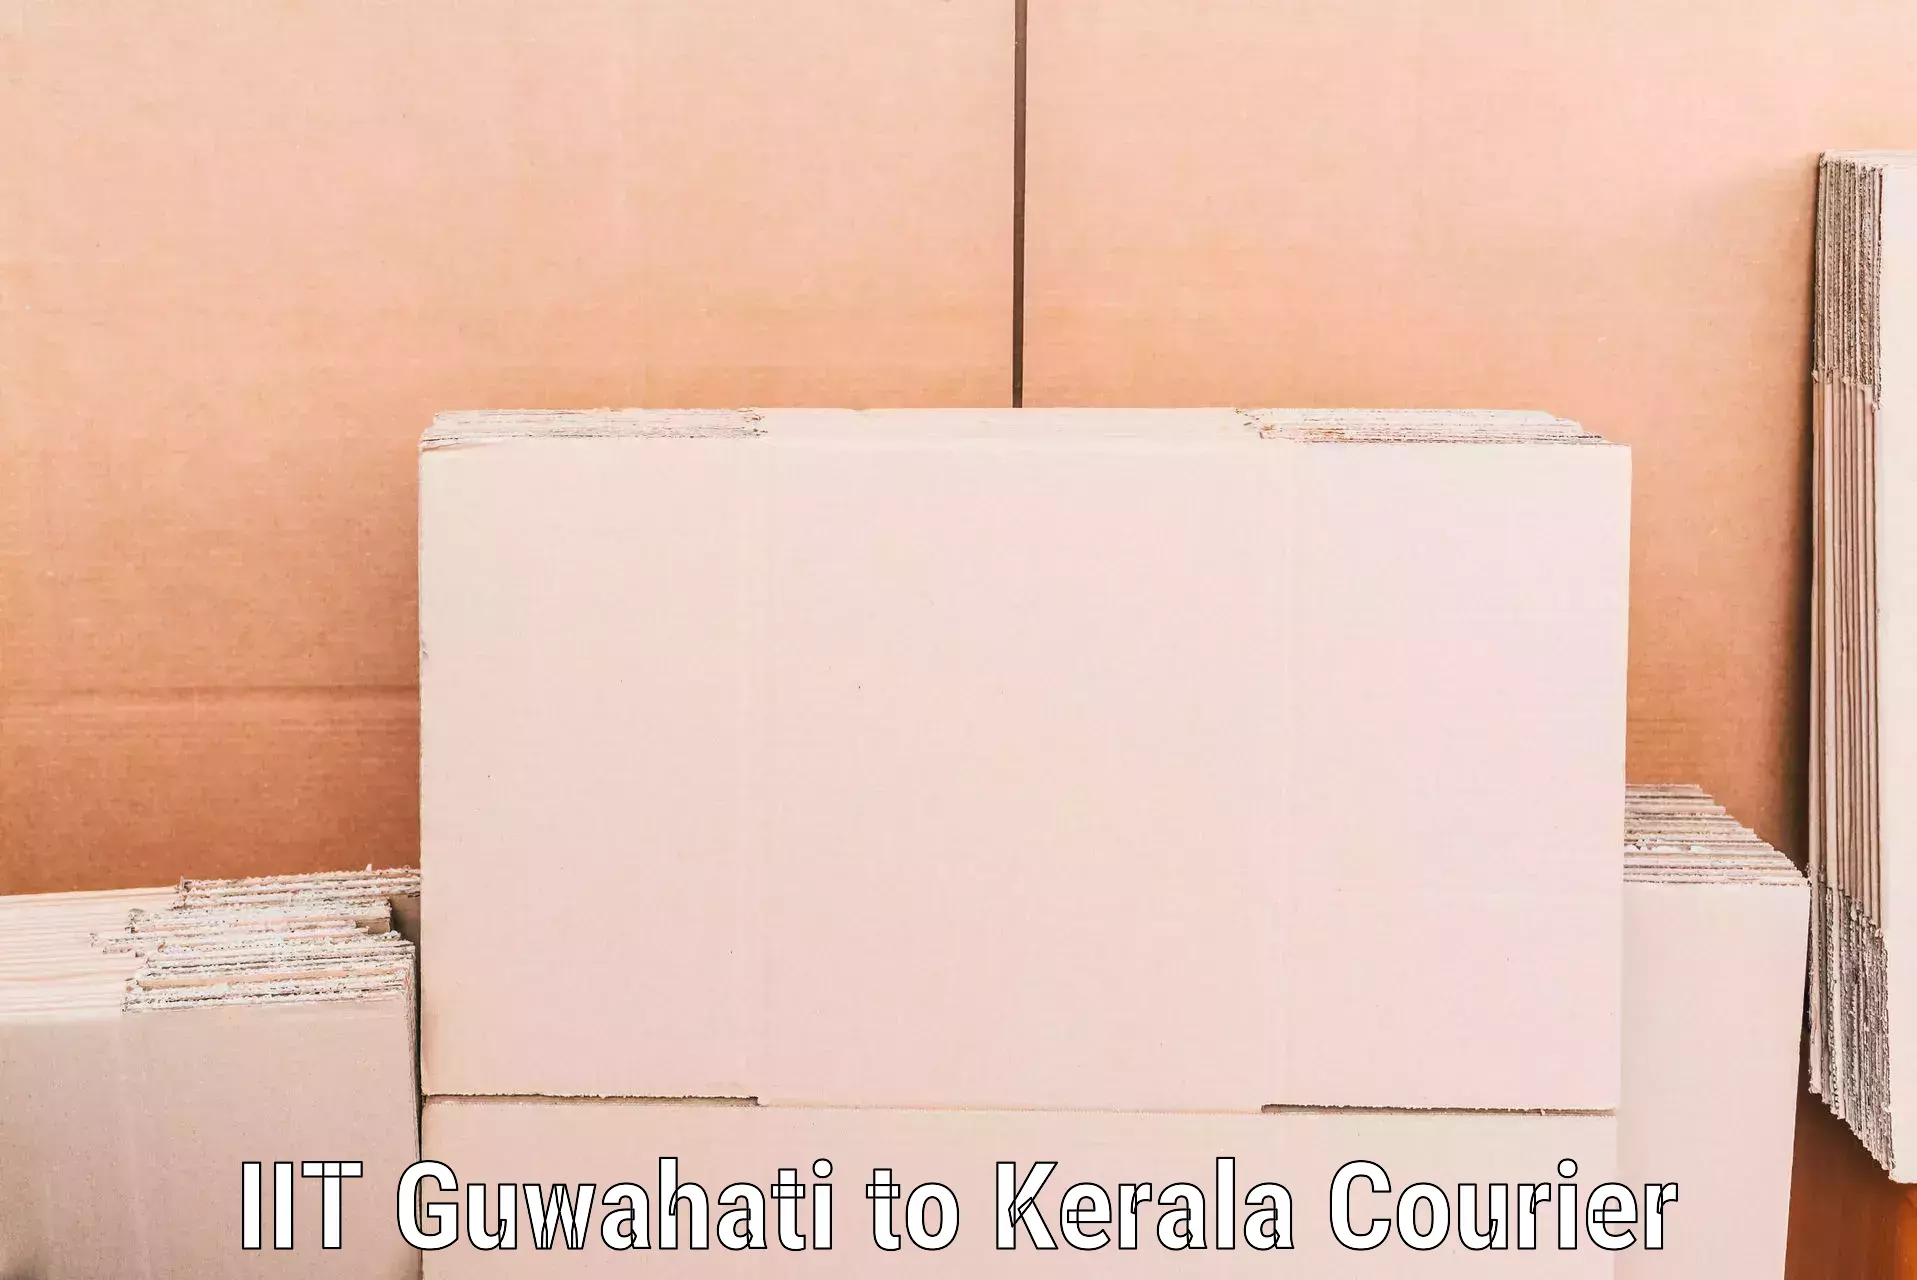 Professional moving assistance IIT Guwahati to Kochi